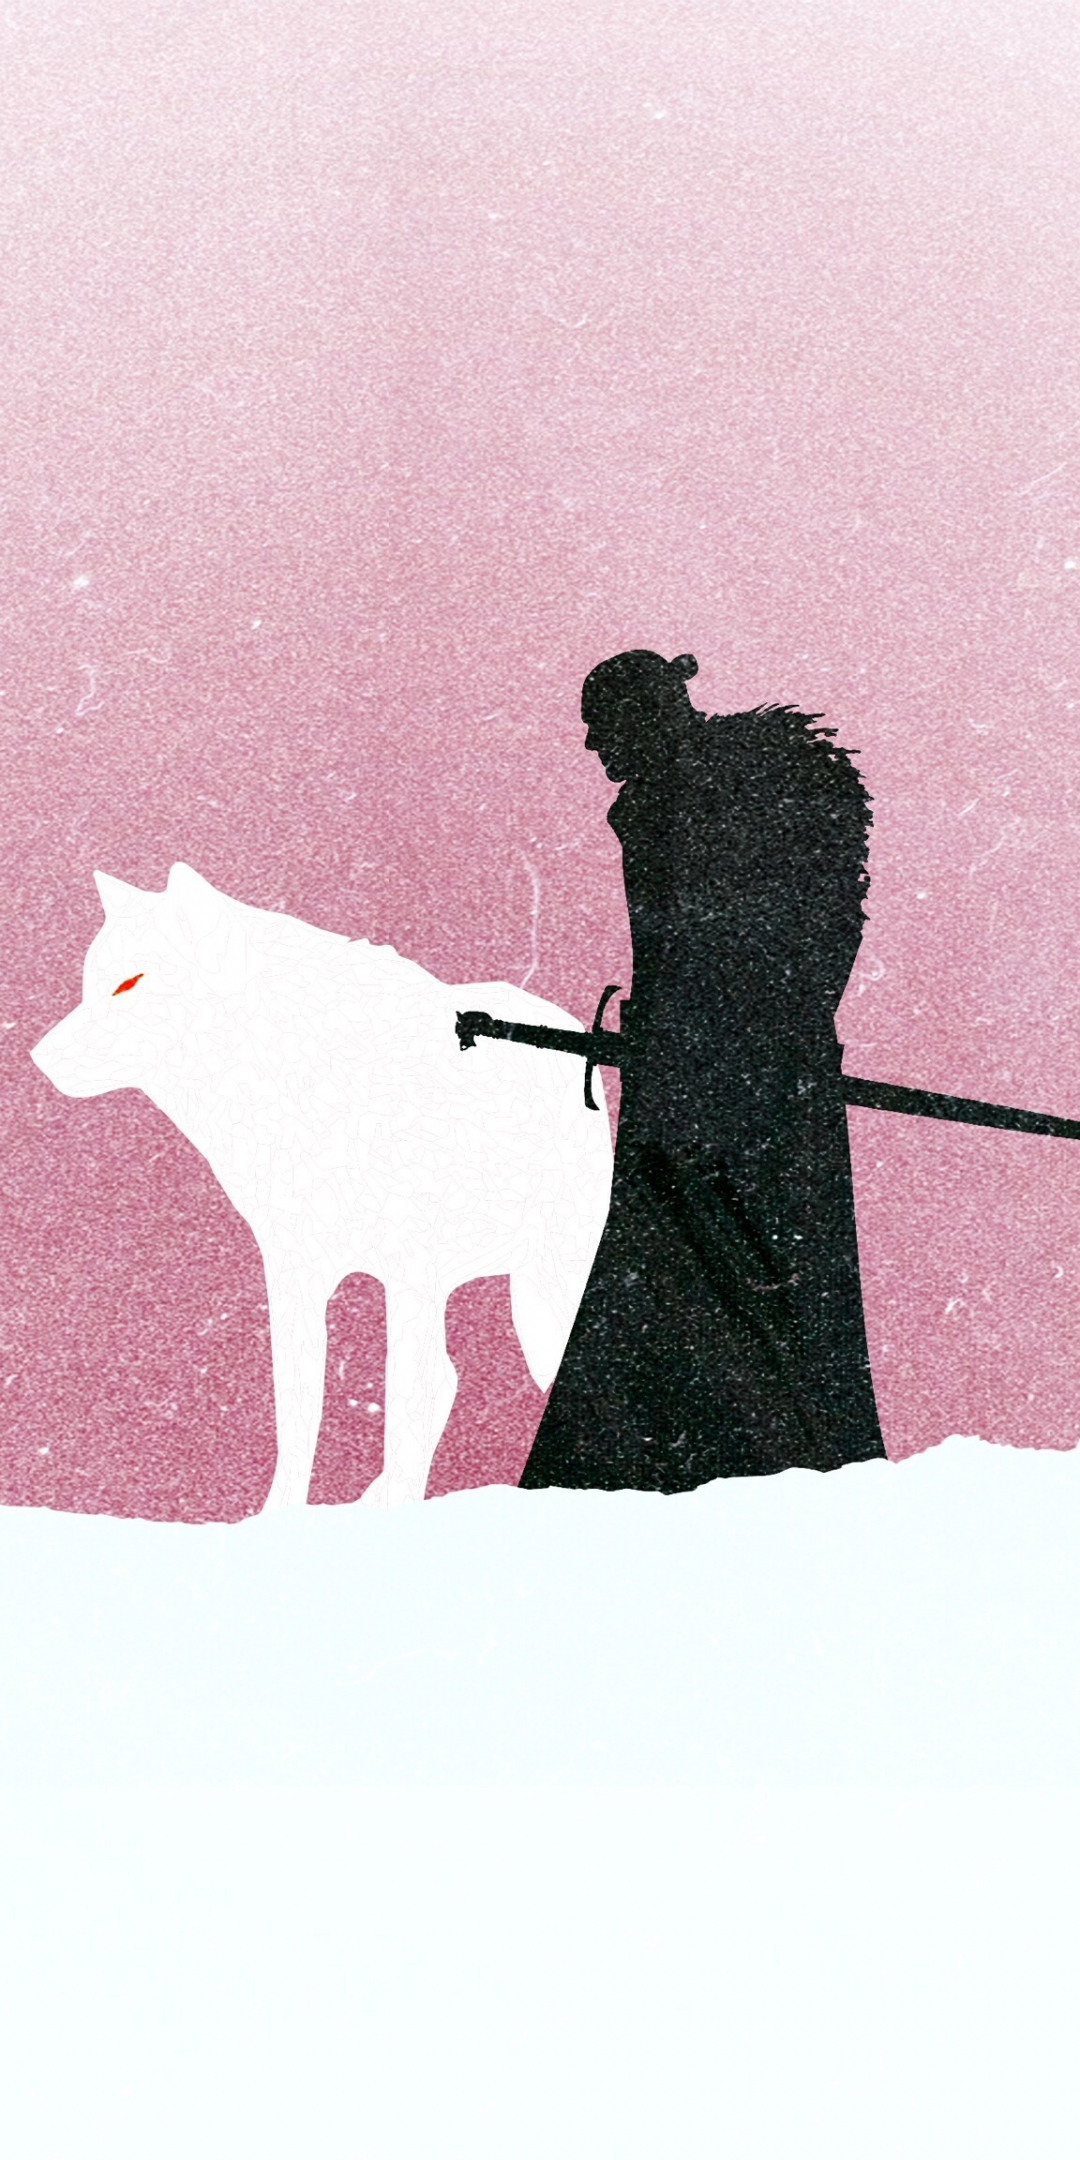 Jon snow, wolf, game of thrones, tv series, minimal, 1080x2160 wallpaper